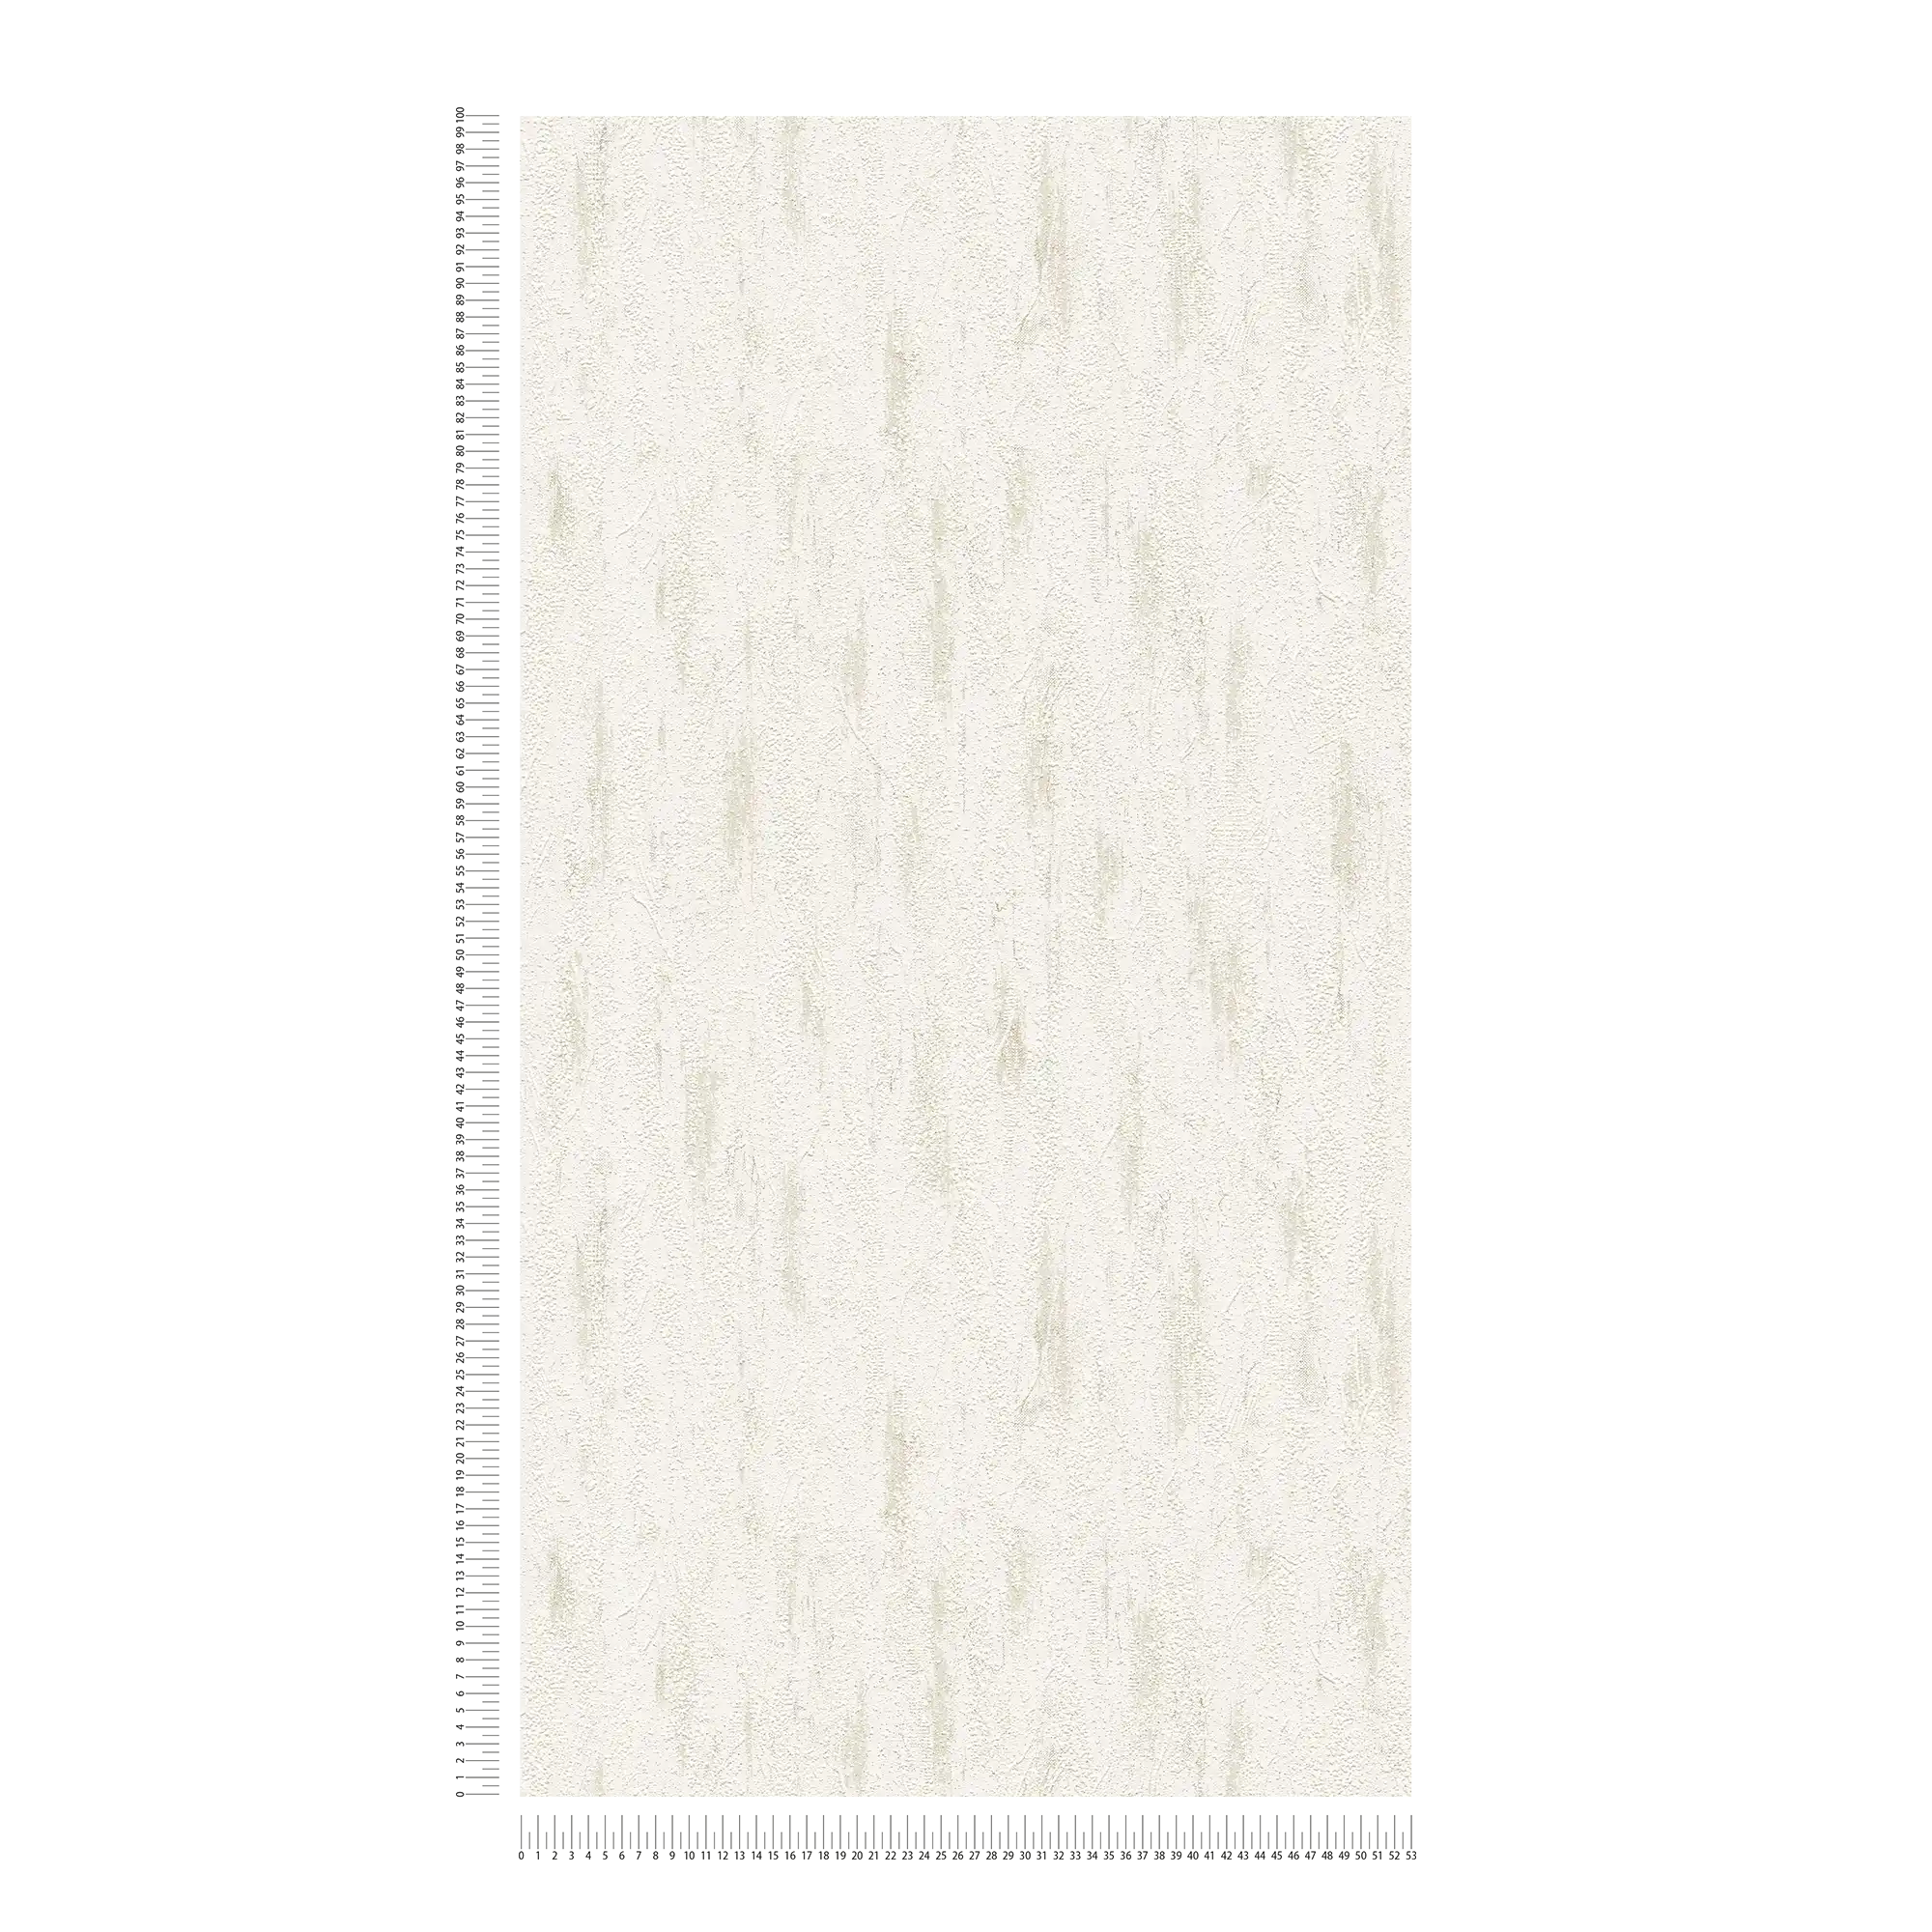             Plaster optics wallpaper with structure decor & colour mottling - grey, cream
        